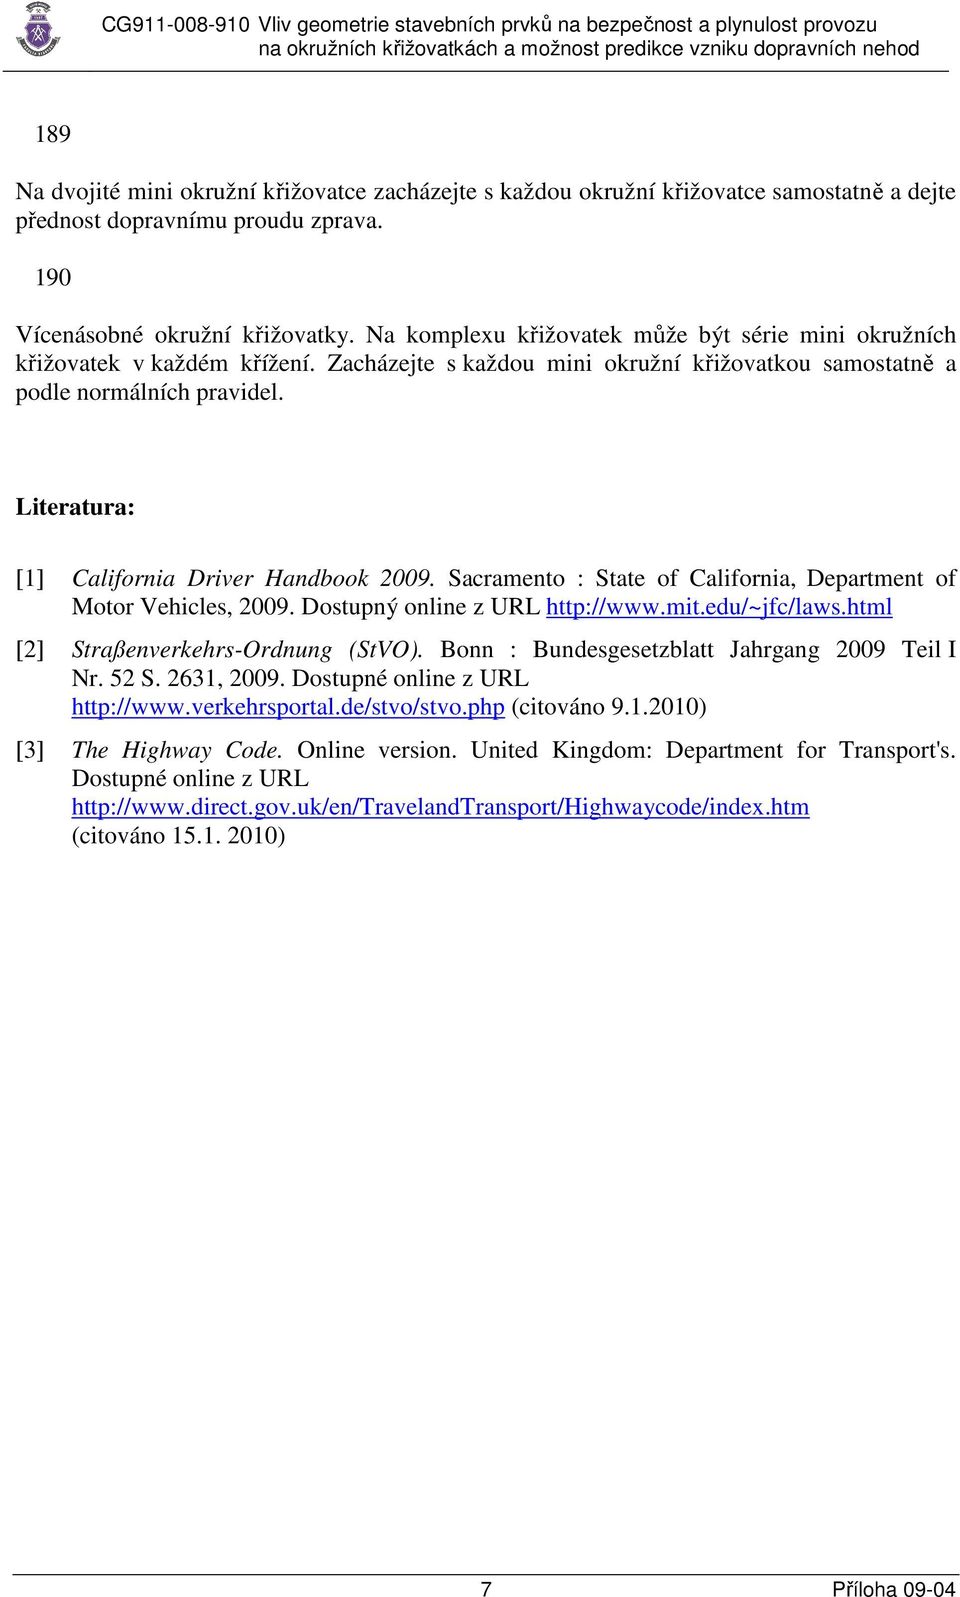 Literatura: [1] California Driver Handbook 2009. Sacramento : State of California, Department of Motor Vehicles, 2009. Dostupný online z URL http://www.mit.edu/~jfc/laws.